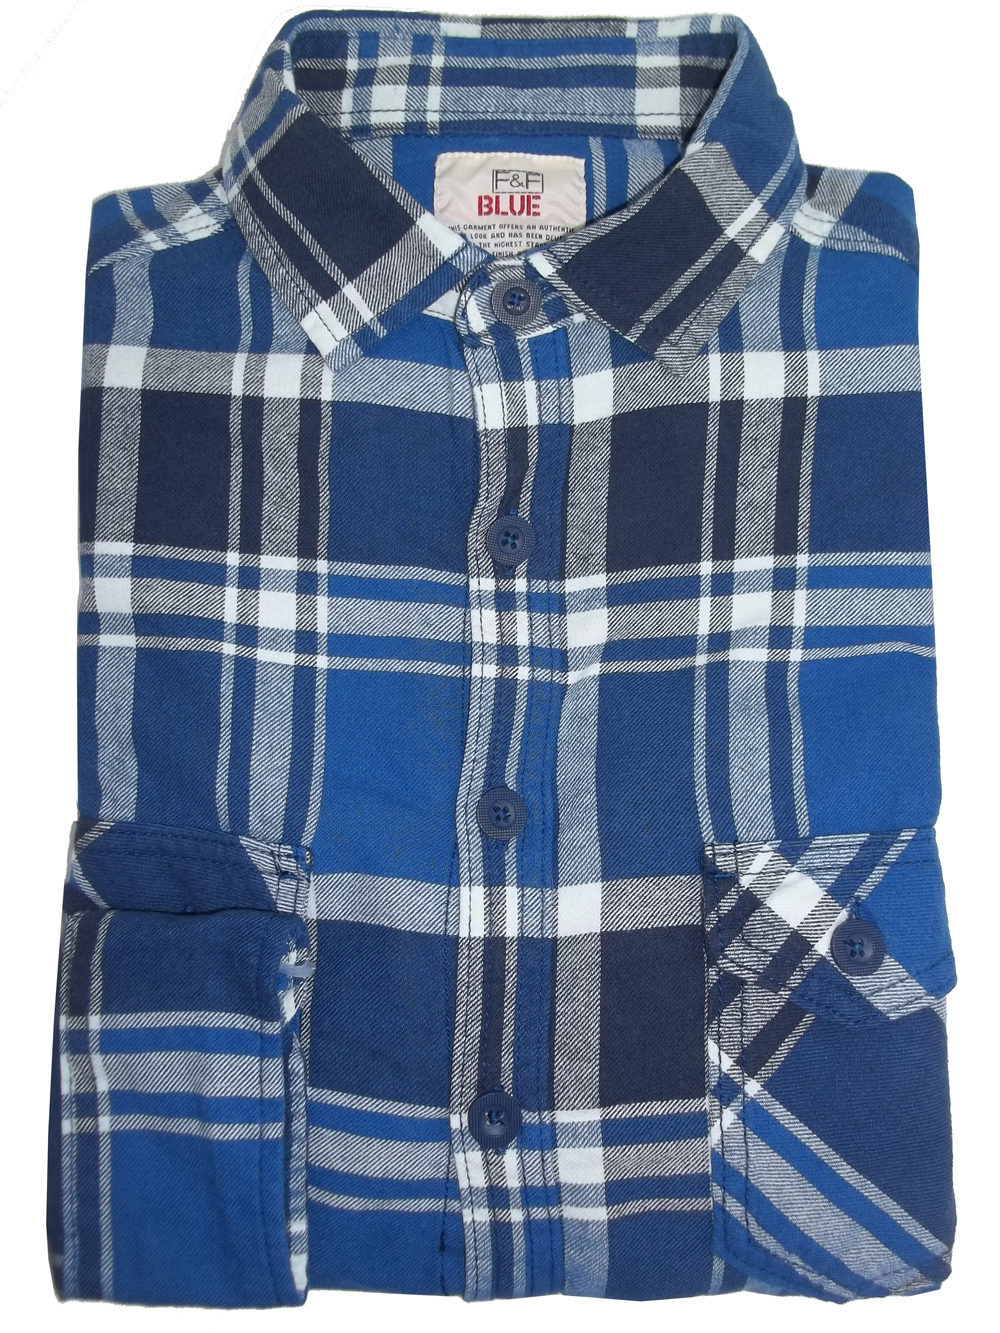 F&F - - Mens BLUE Check Print Long Sleeve Shirt - Size Small to XXXLarge